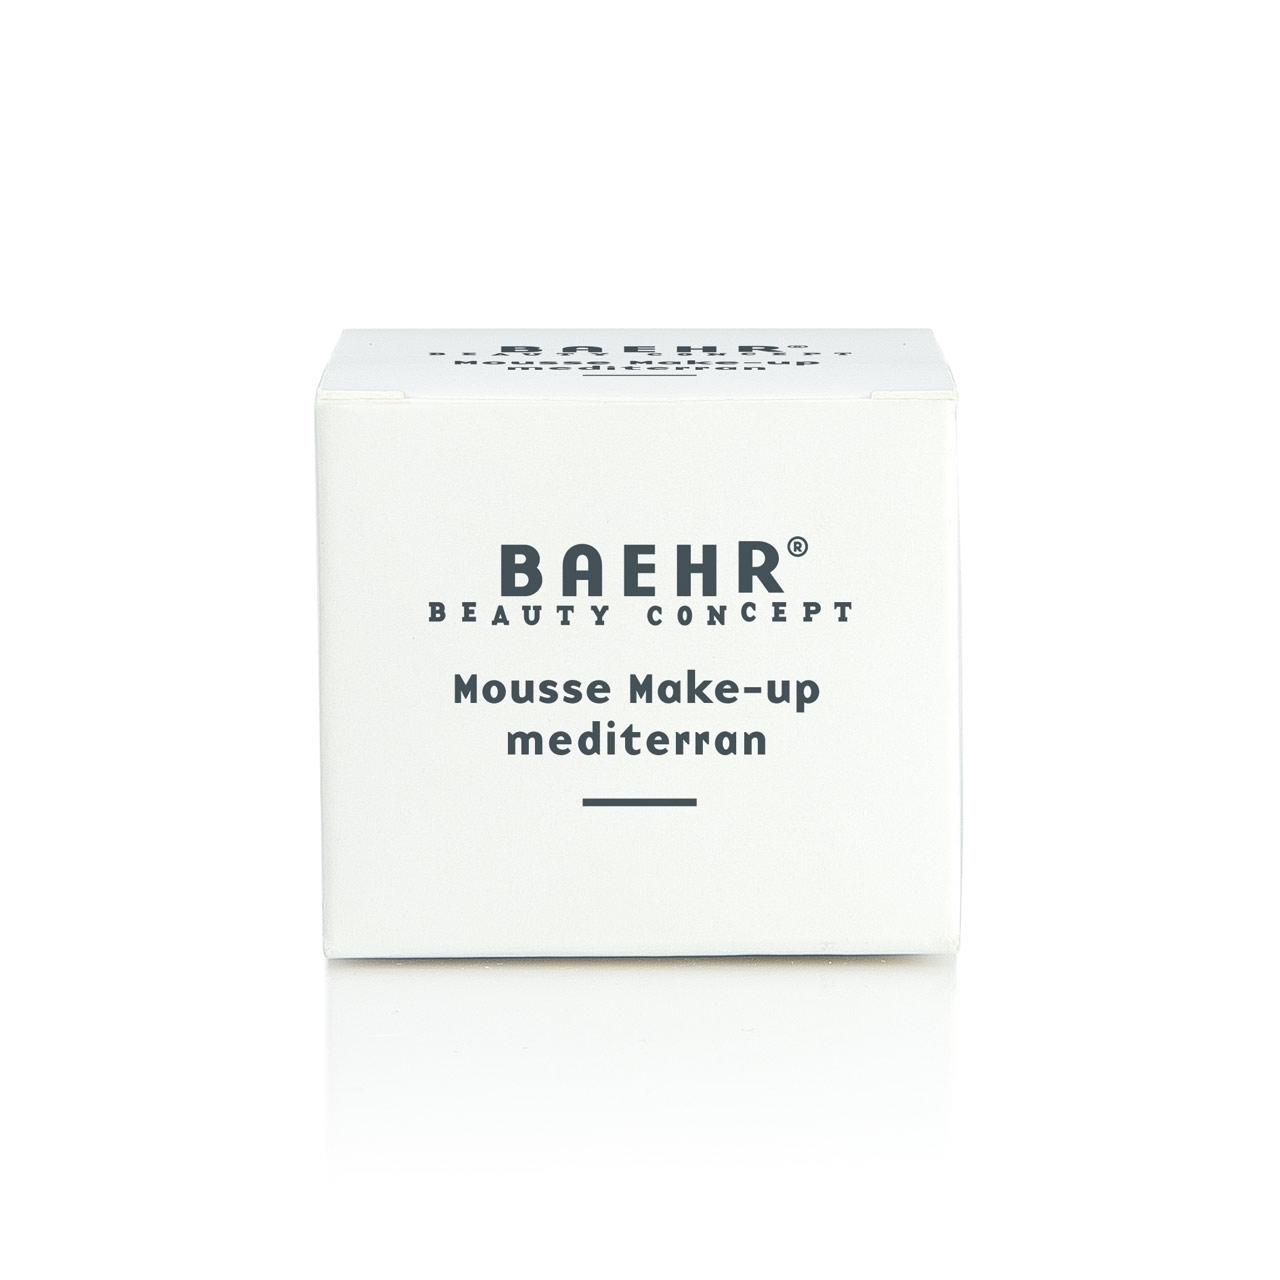 BAEHR BEAUTY CONCEPT Mousse Make-up mediterran 15 ml